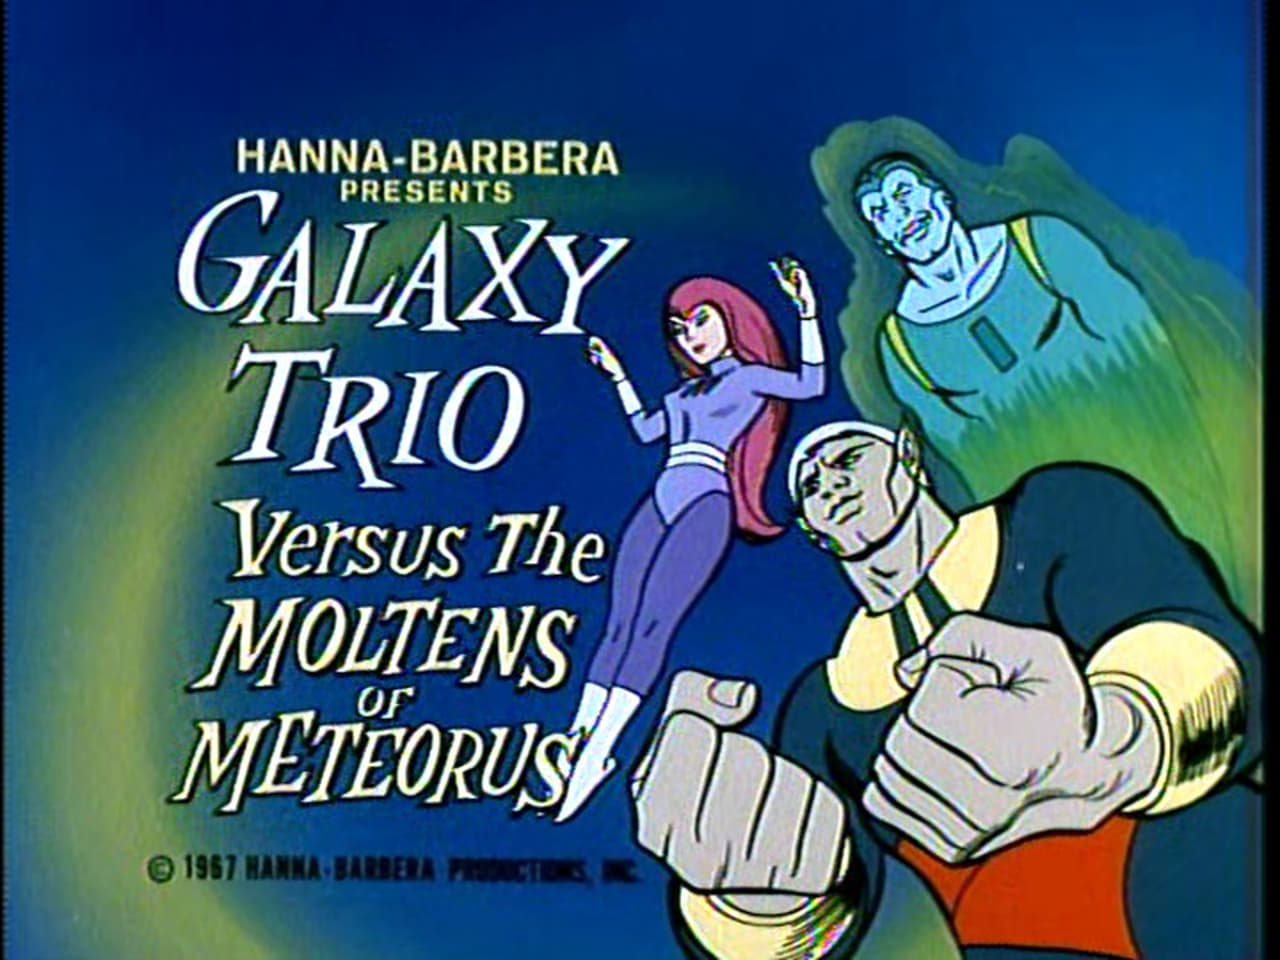 The Galaxy Trio Versus The Moltens of Meteorus